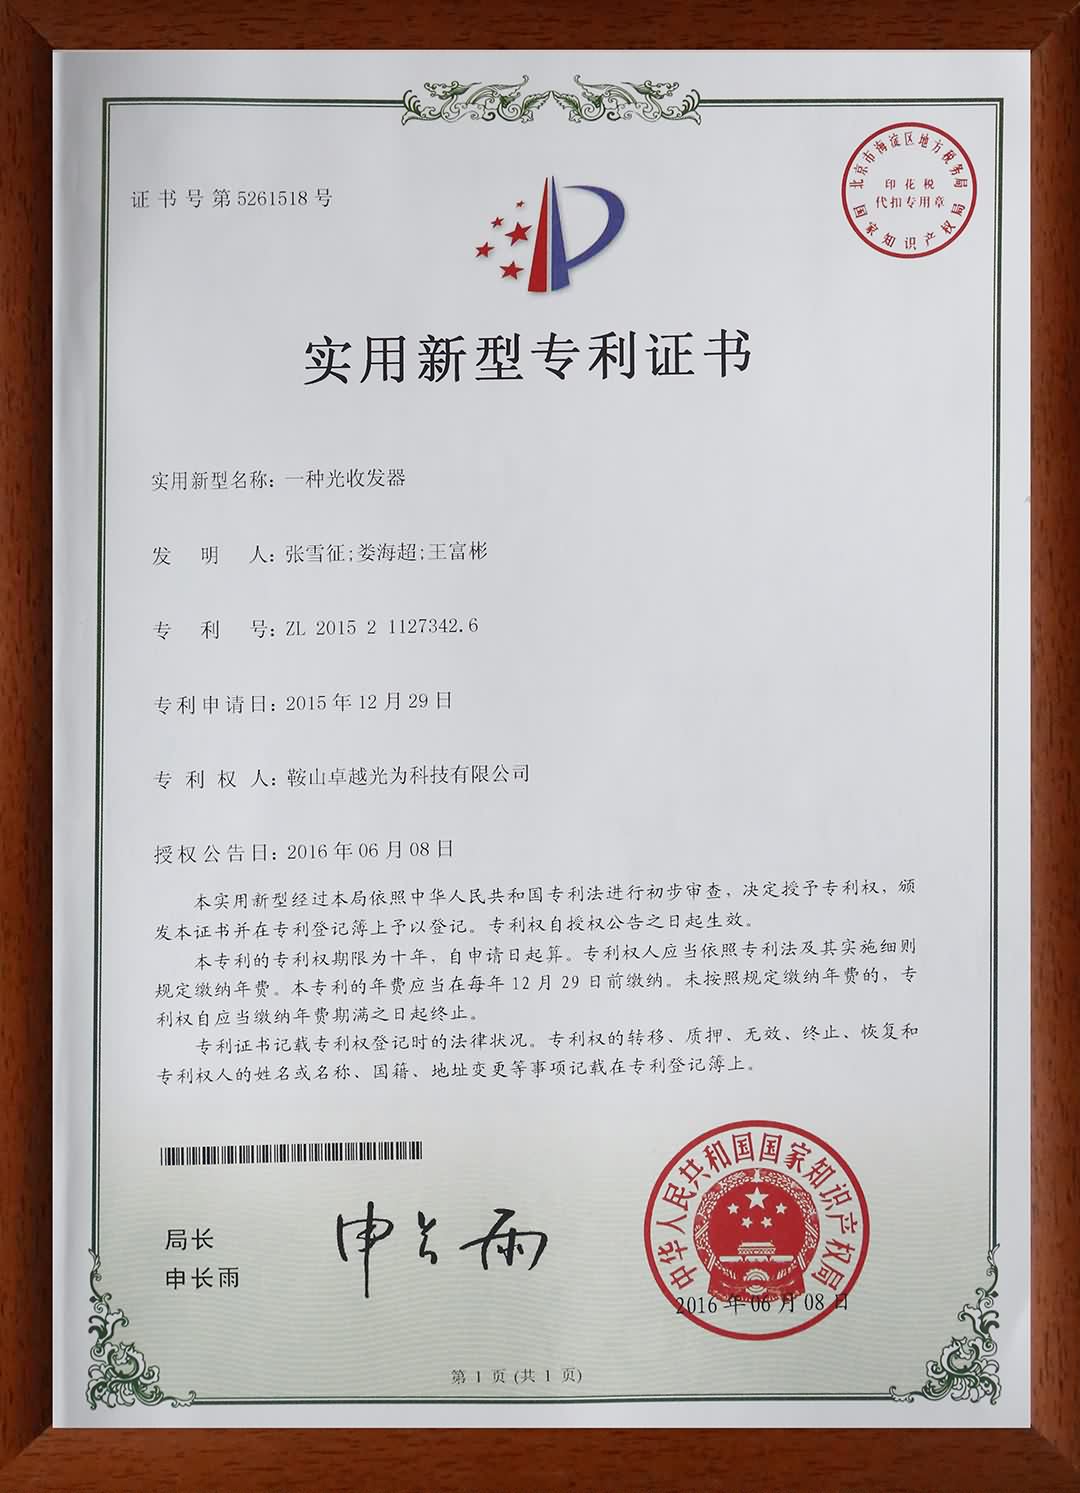 Paten certificate 5